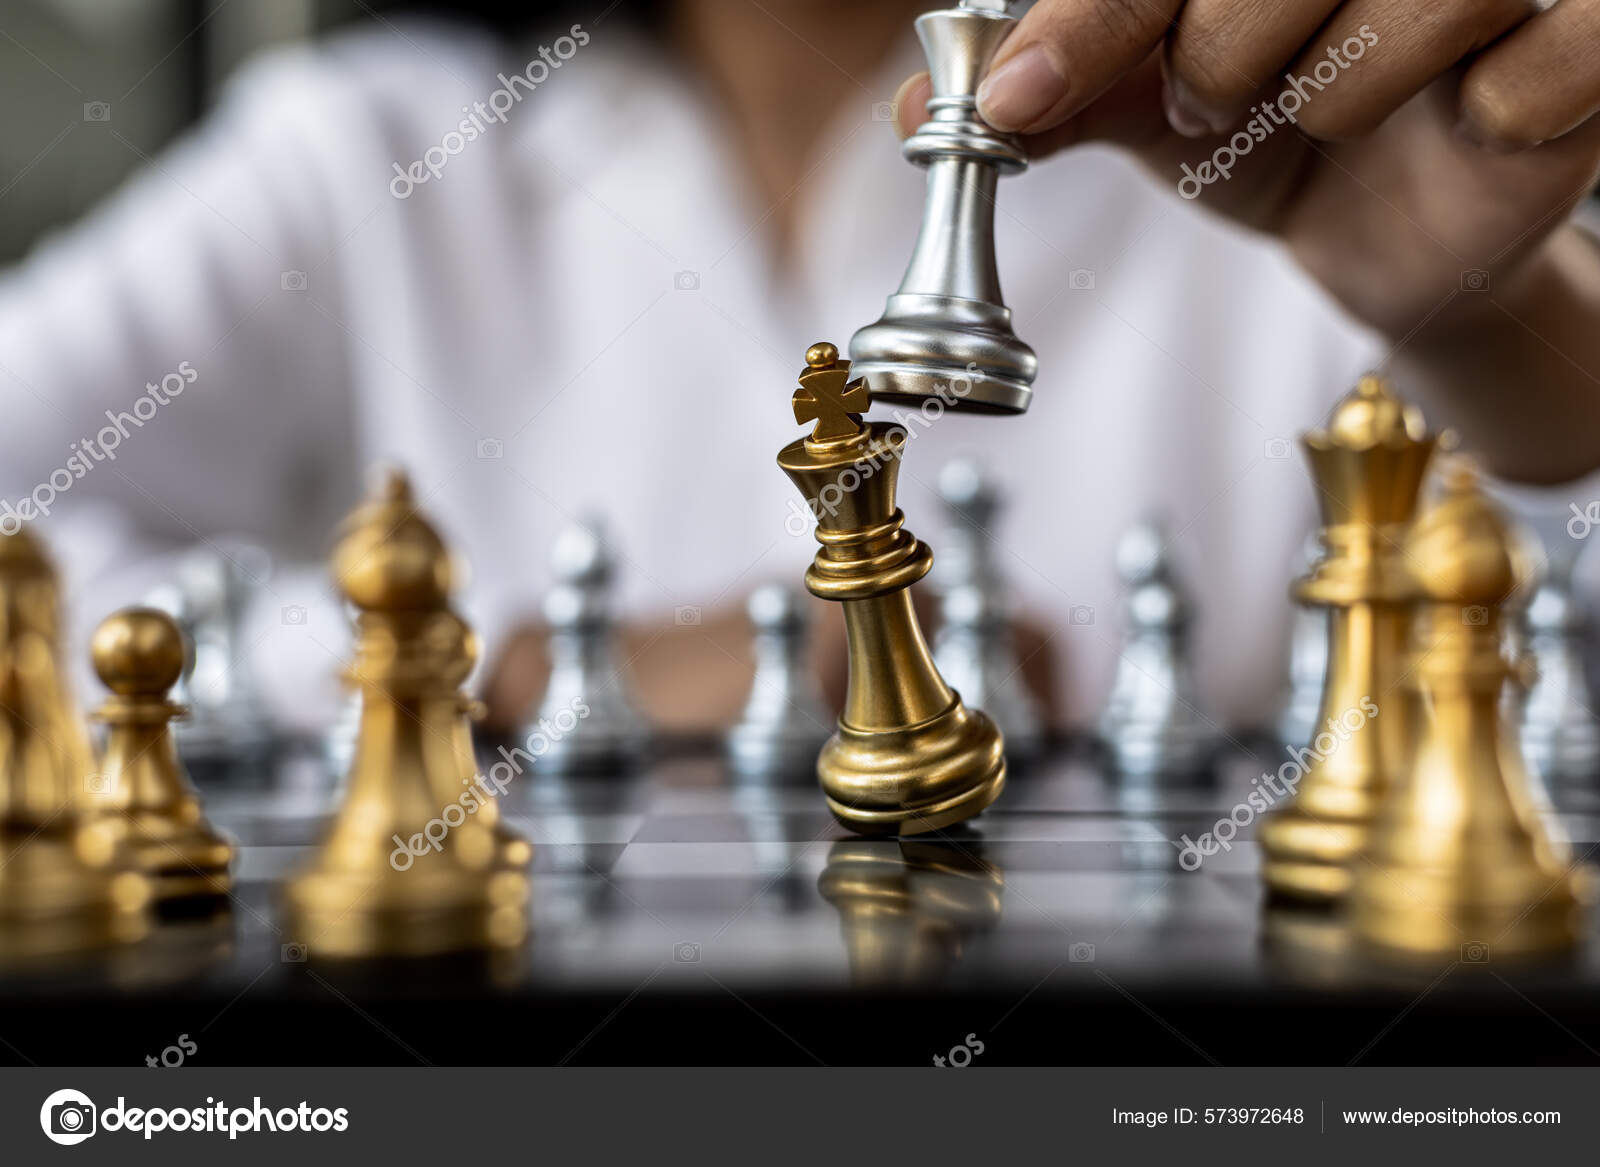 Pessoa Jogando Xadrez No Tabuleiro · Foto profissional gratuita